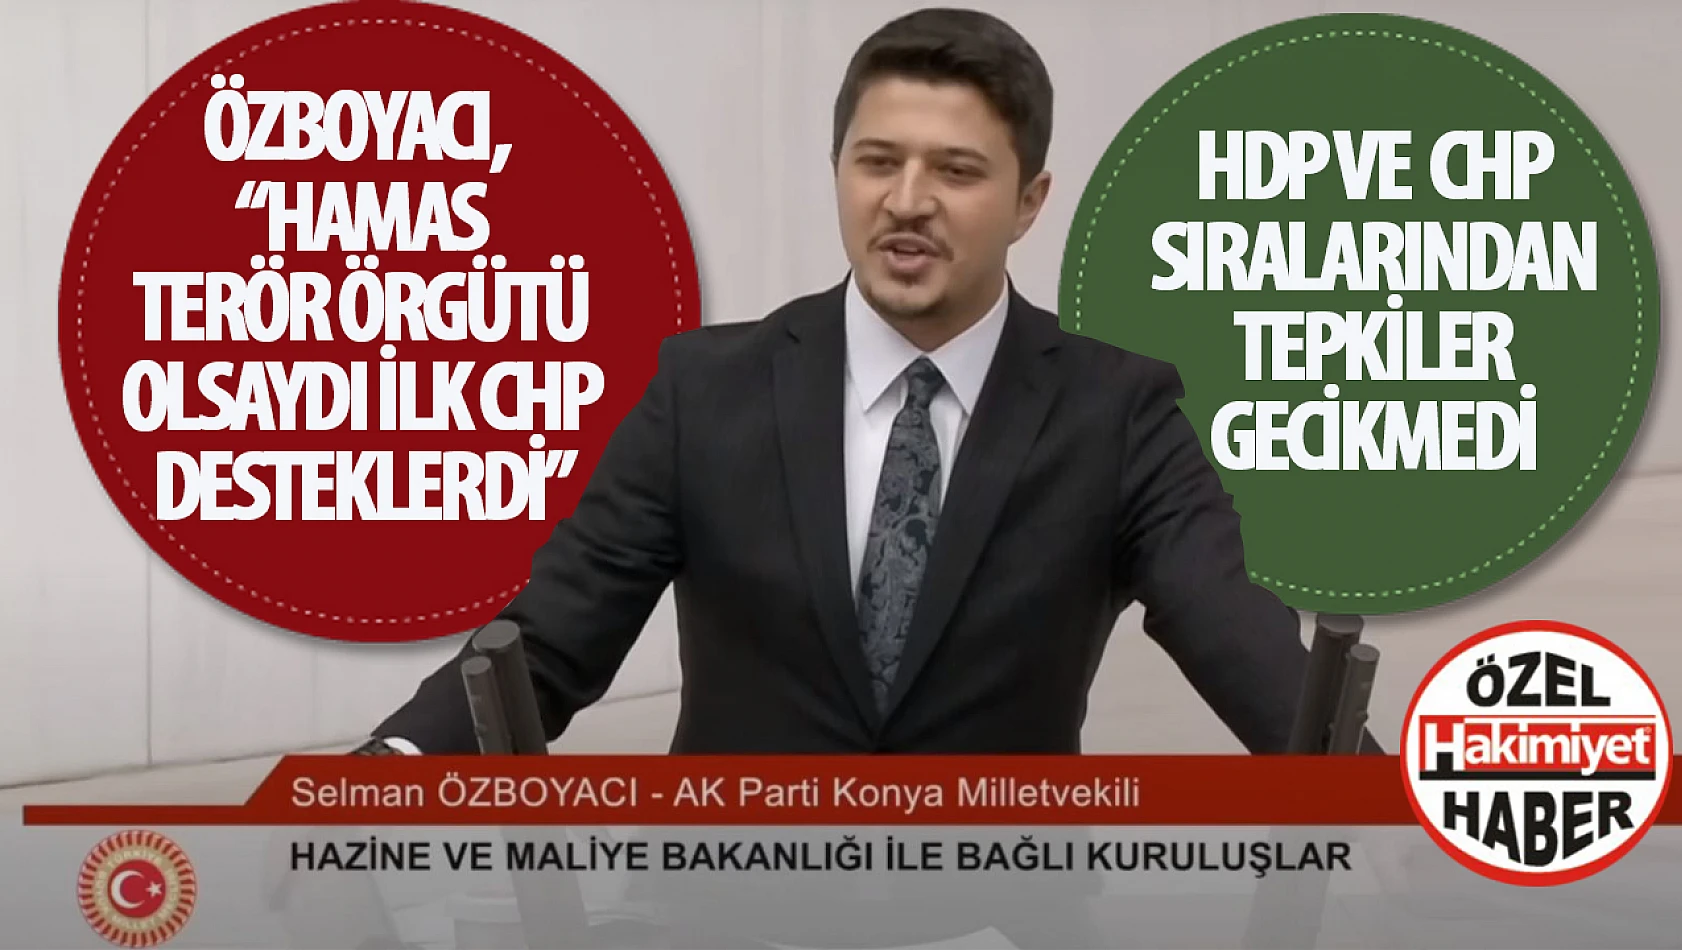 AK Parti Milletvekili Özboyacı, HDP ve CHP'ye Sert Tepki Gösterdi: